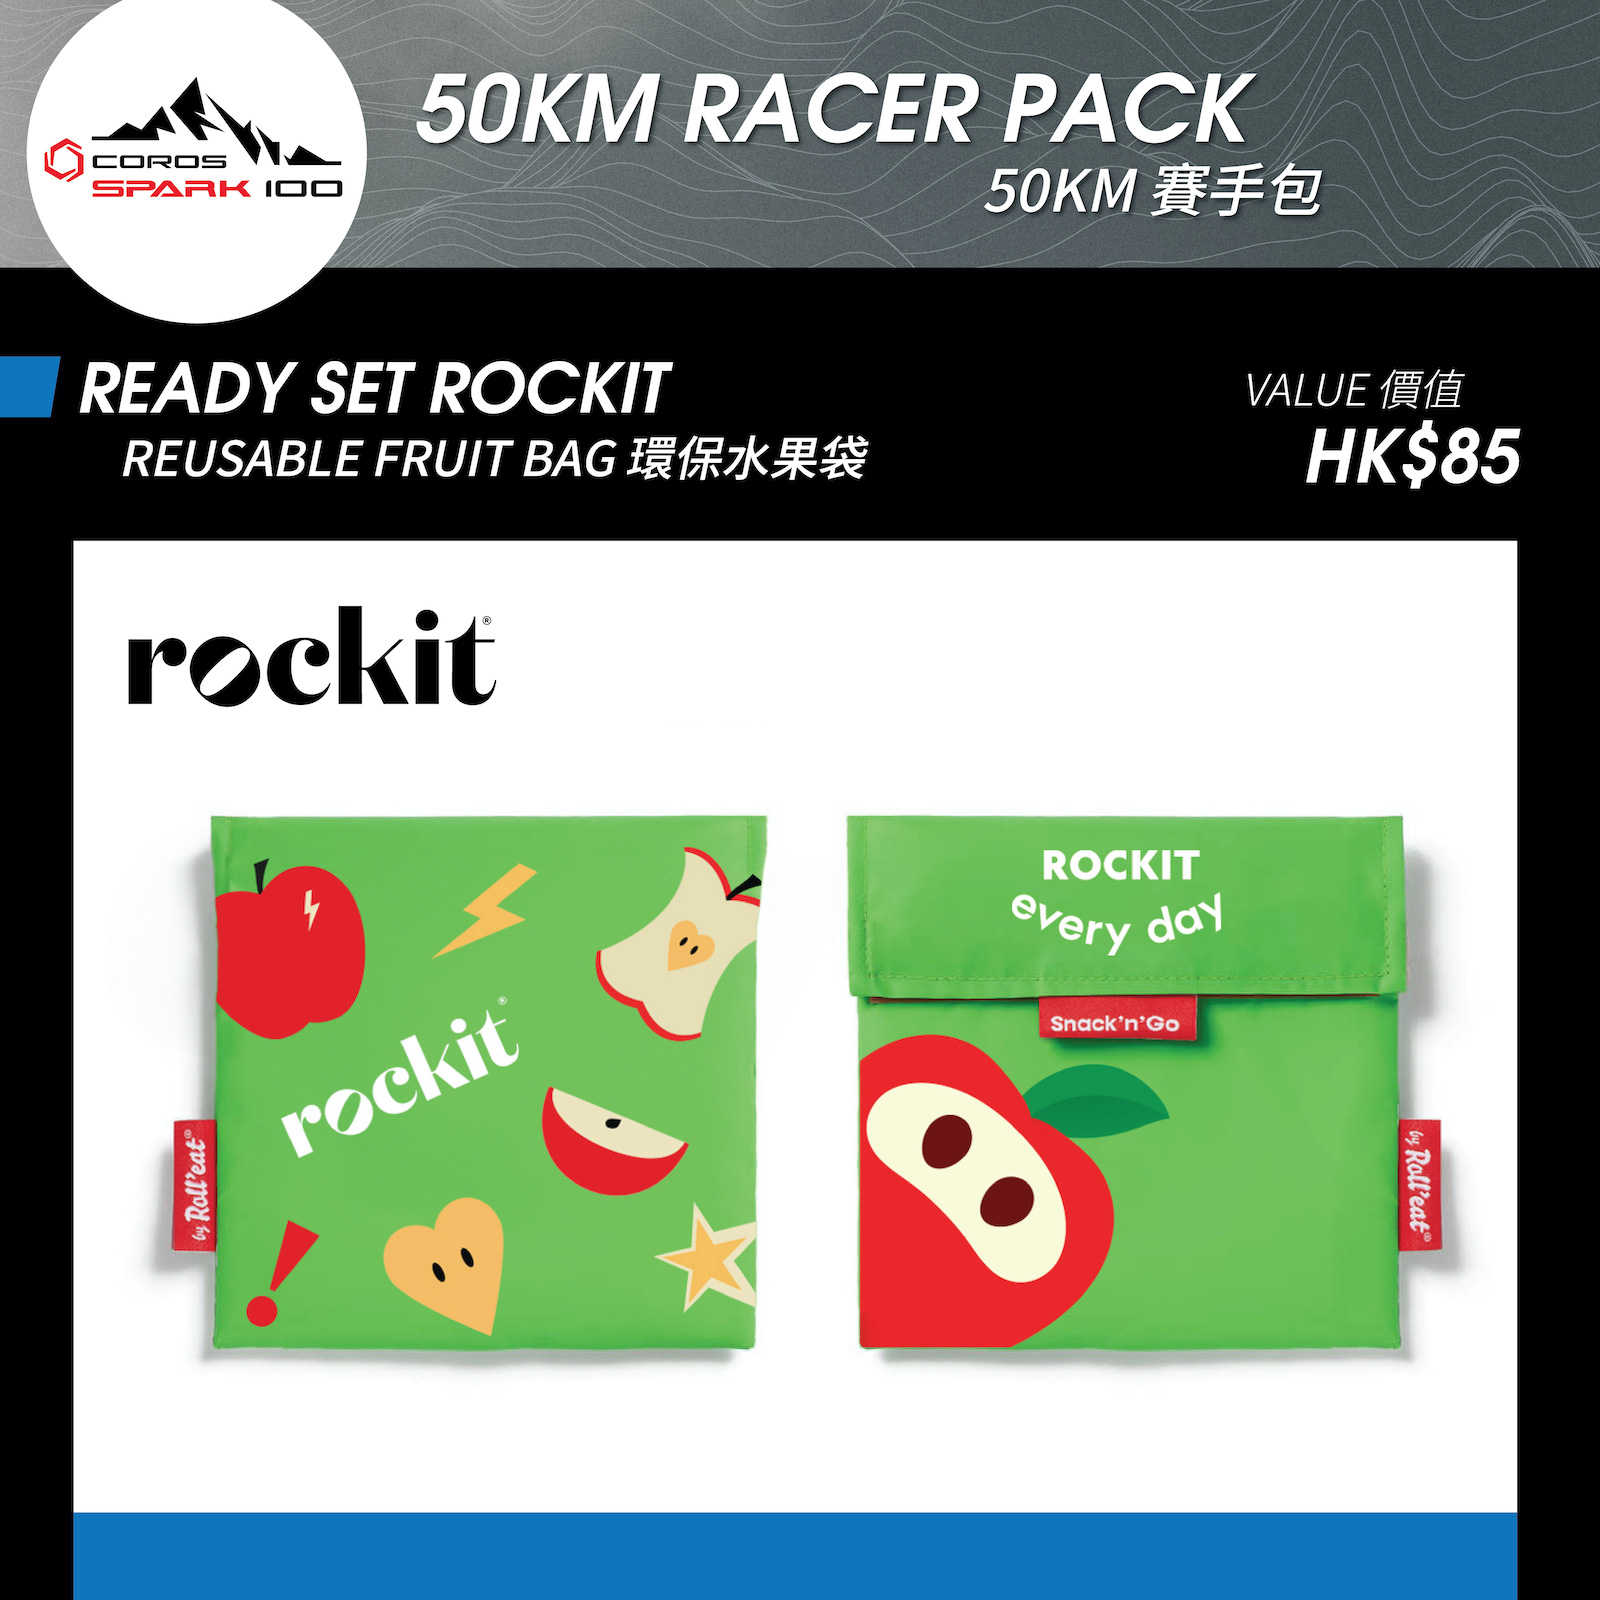 READY SET ROCKIT - Reusable fruit bag (Value: HK$85)